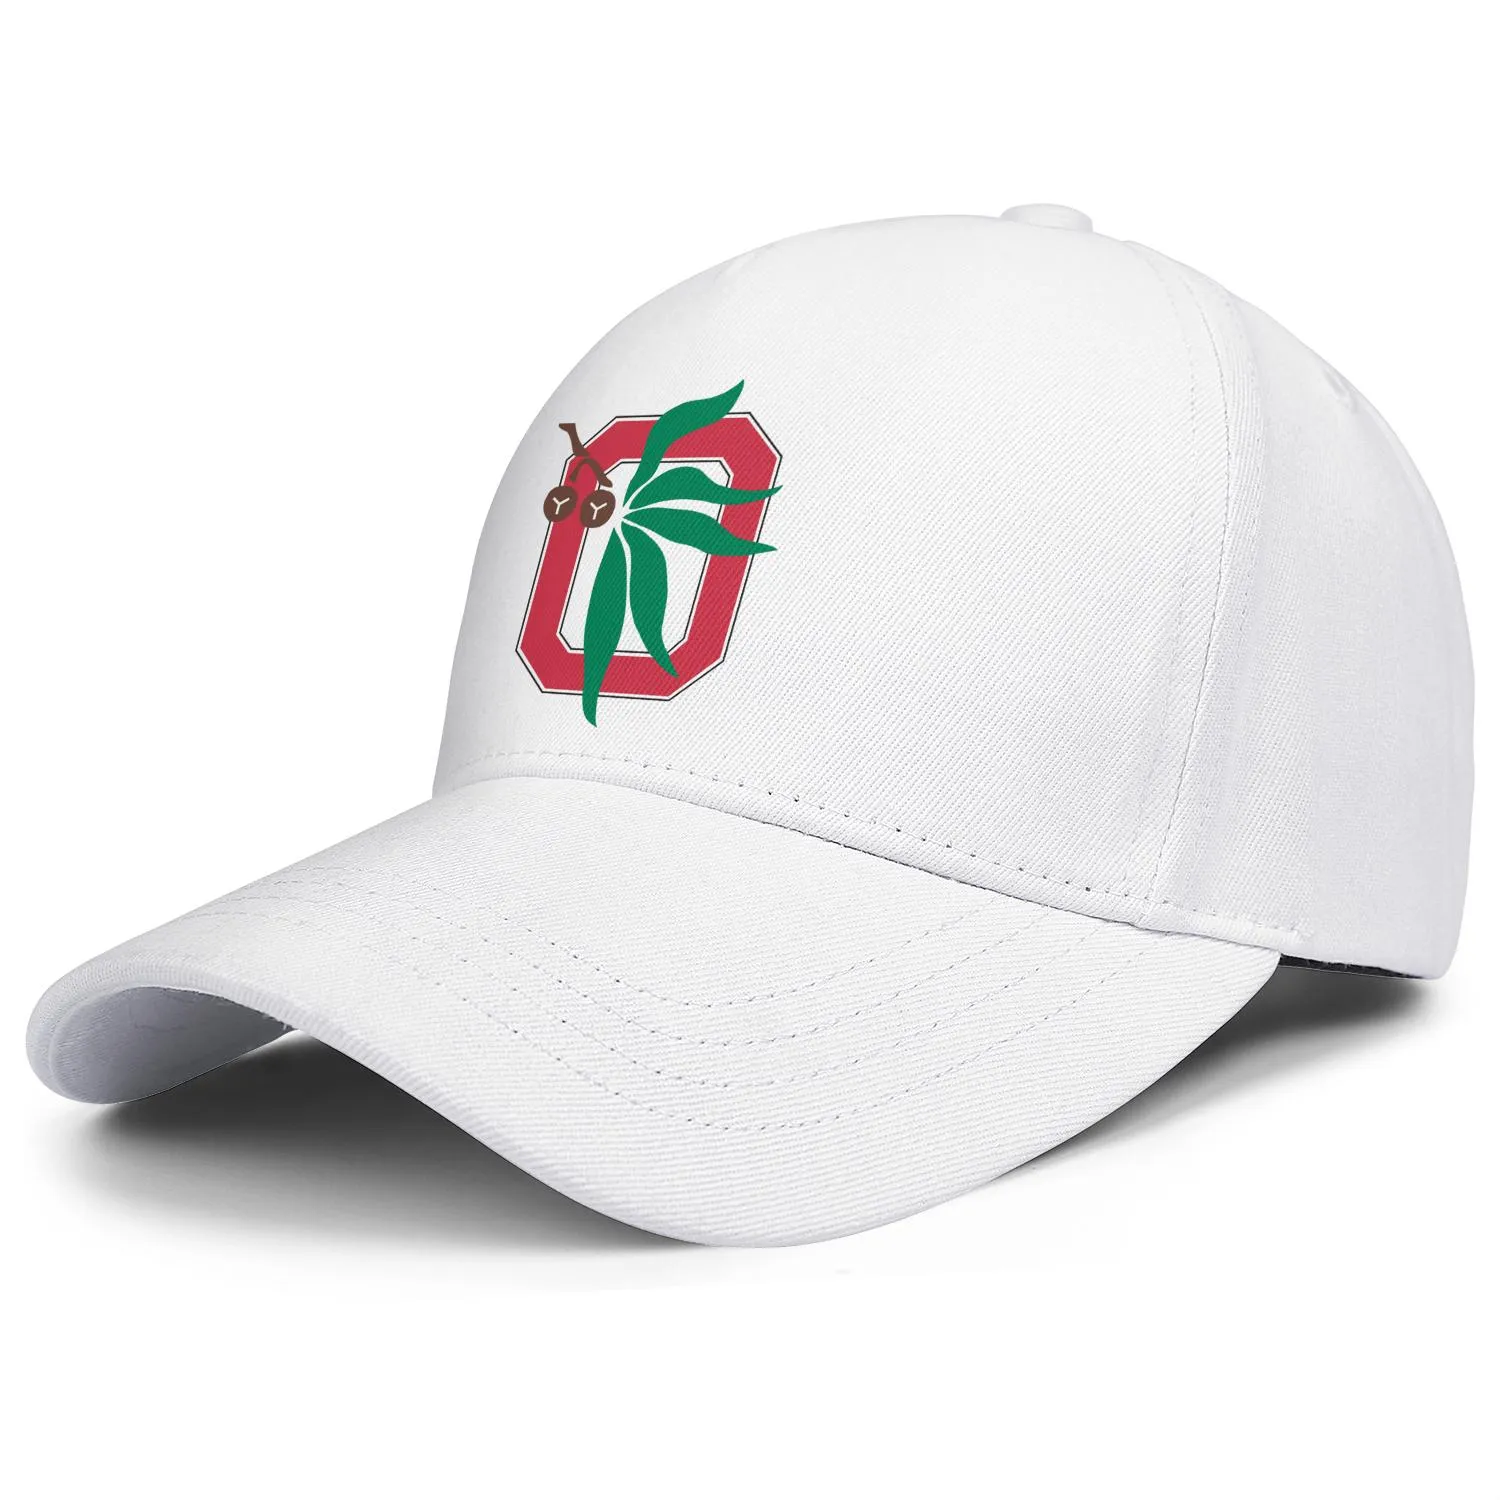 Fashion Ohio State Buckeyes Unisex Baseball Cap Fitted Best Trucke Hats 388 football logo Marble Print white black Gay pride4520610